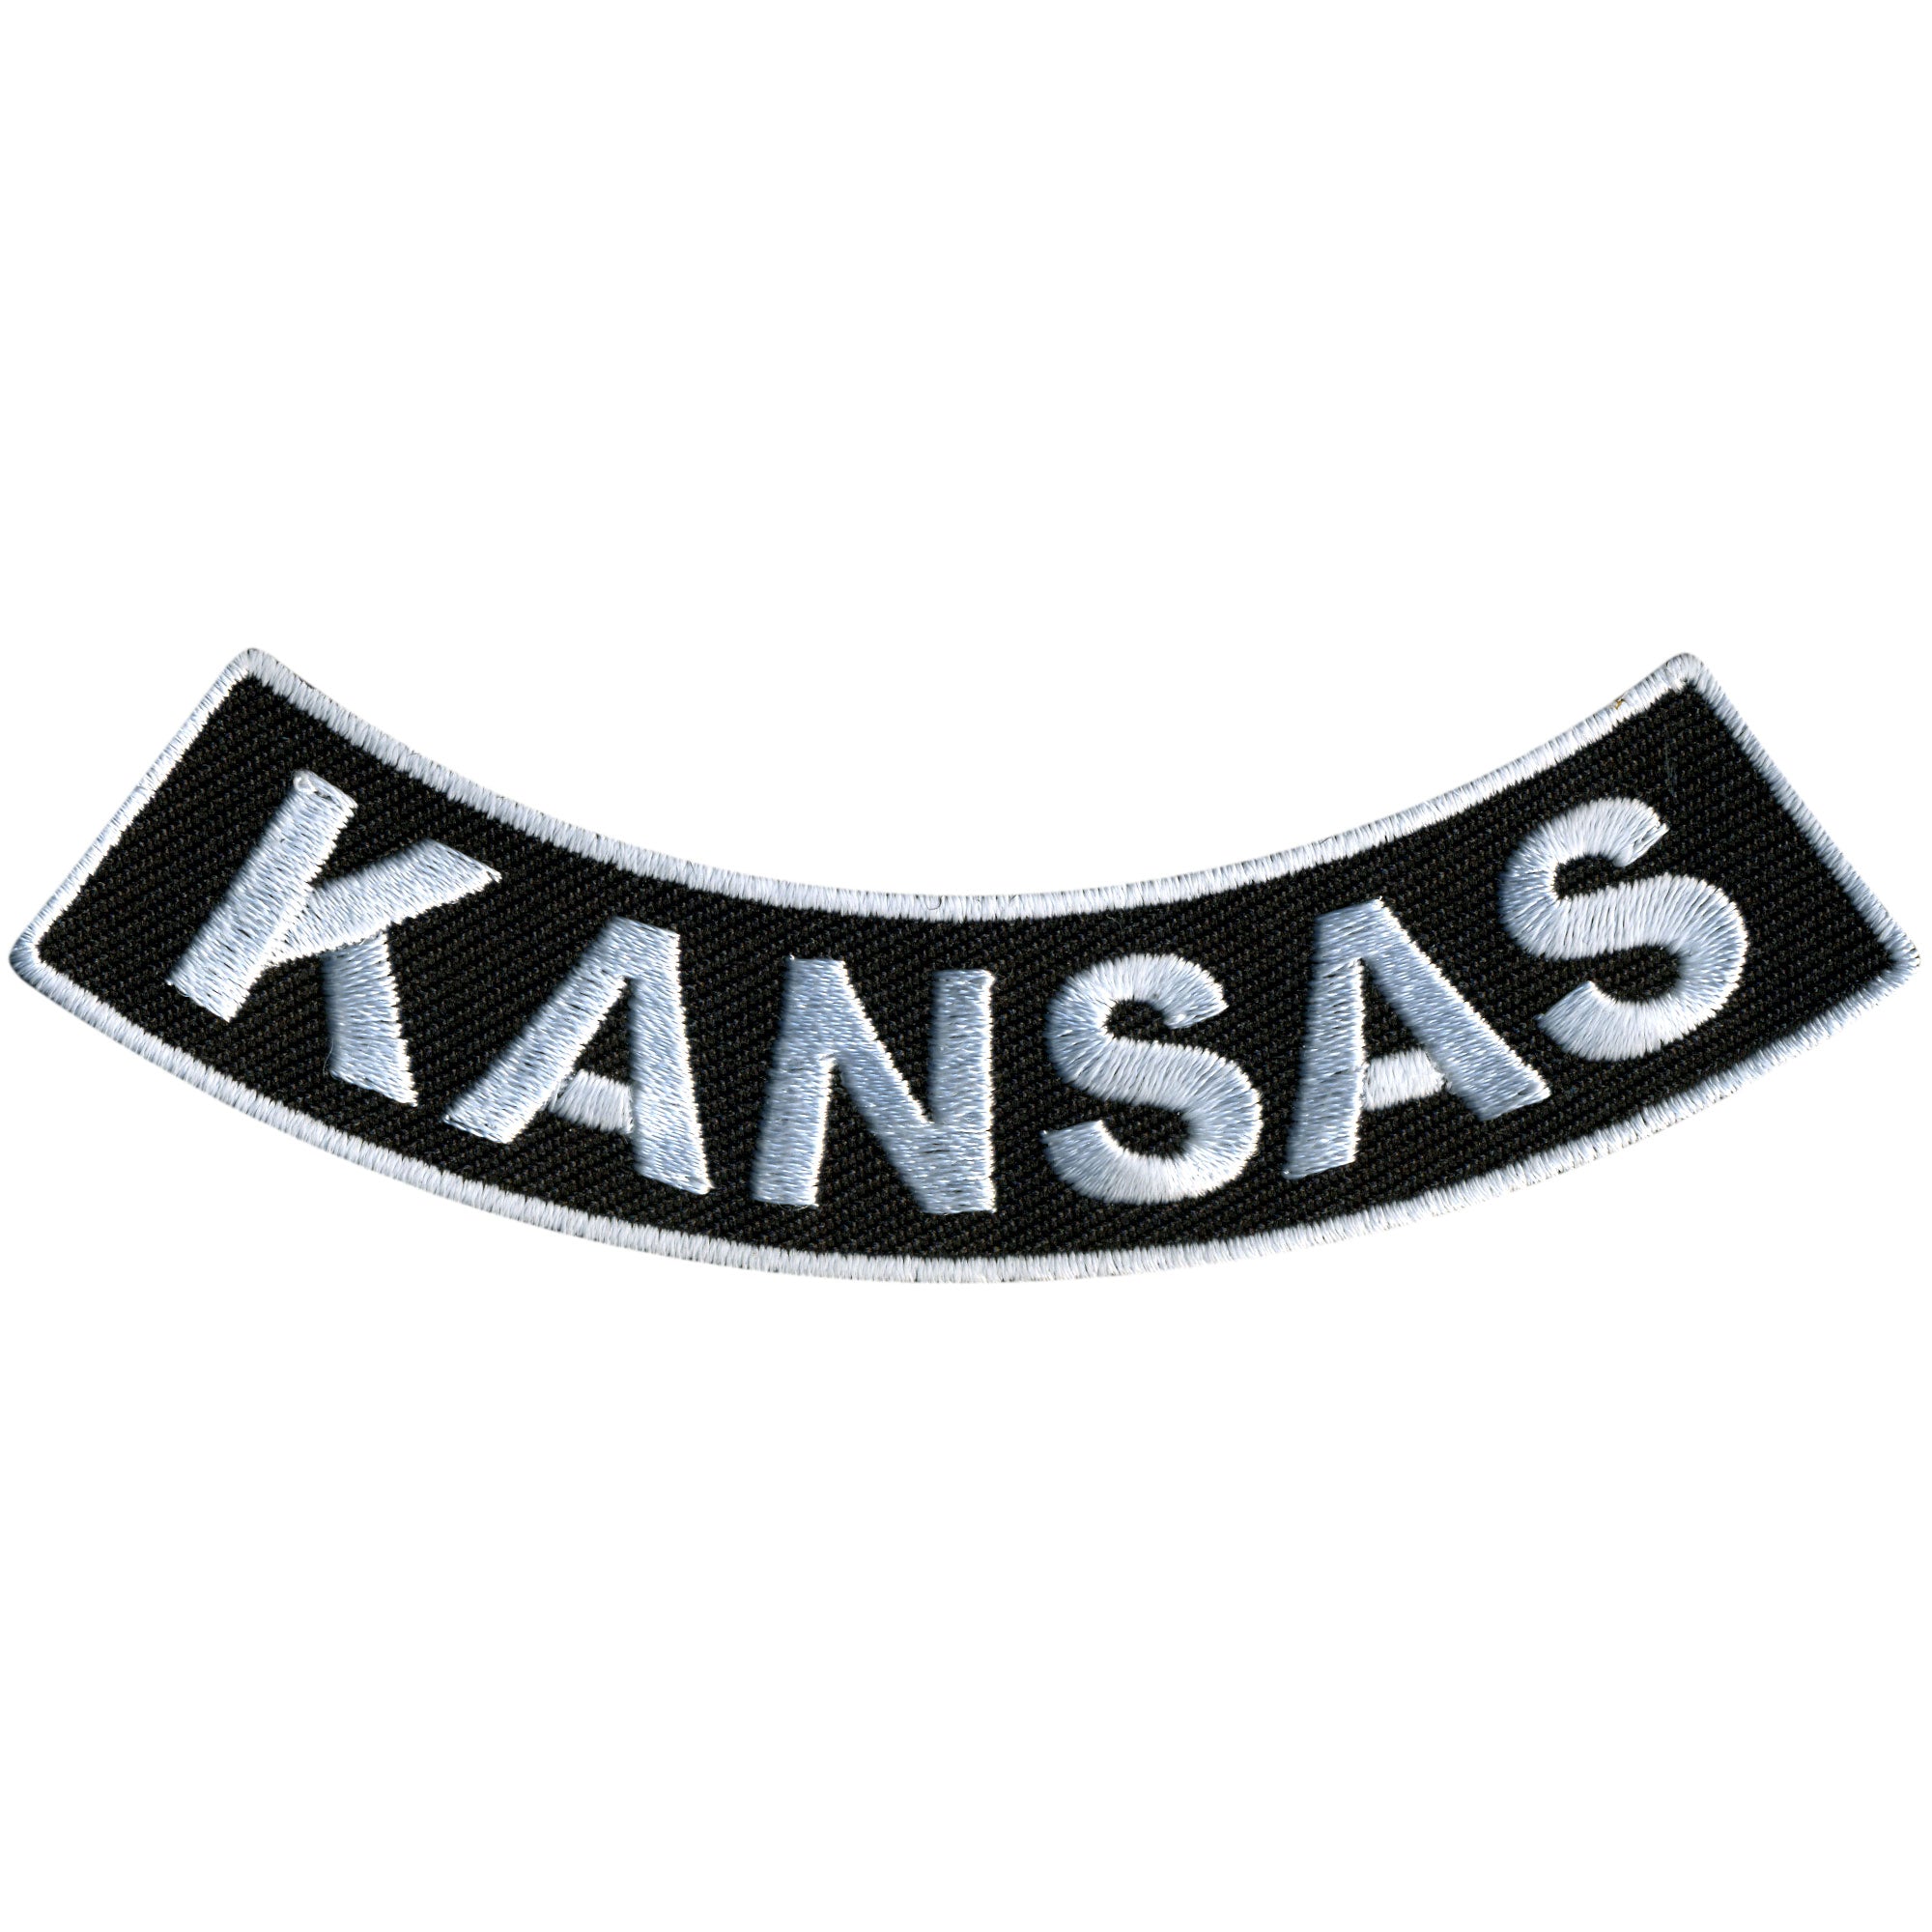 Hot Leathers Kansas 4” X 1” Bottom Rocker Patch